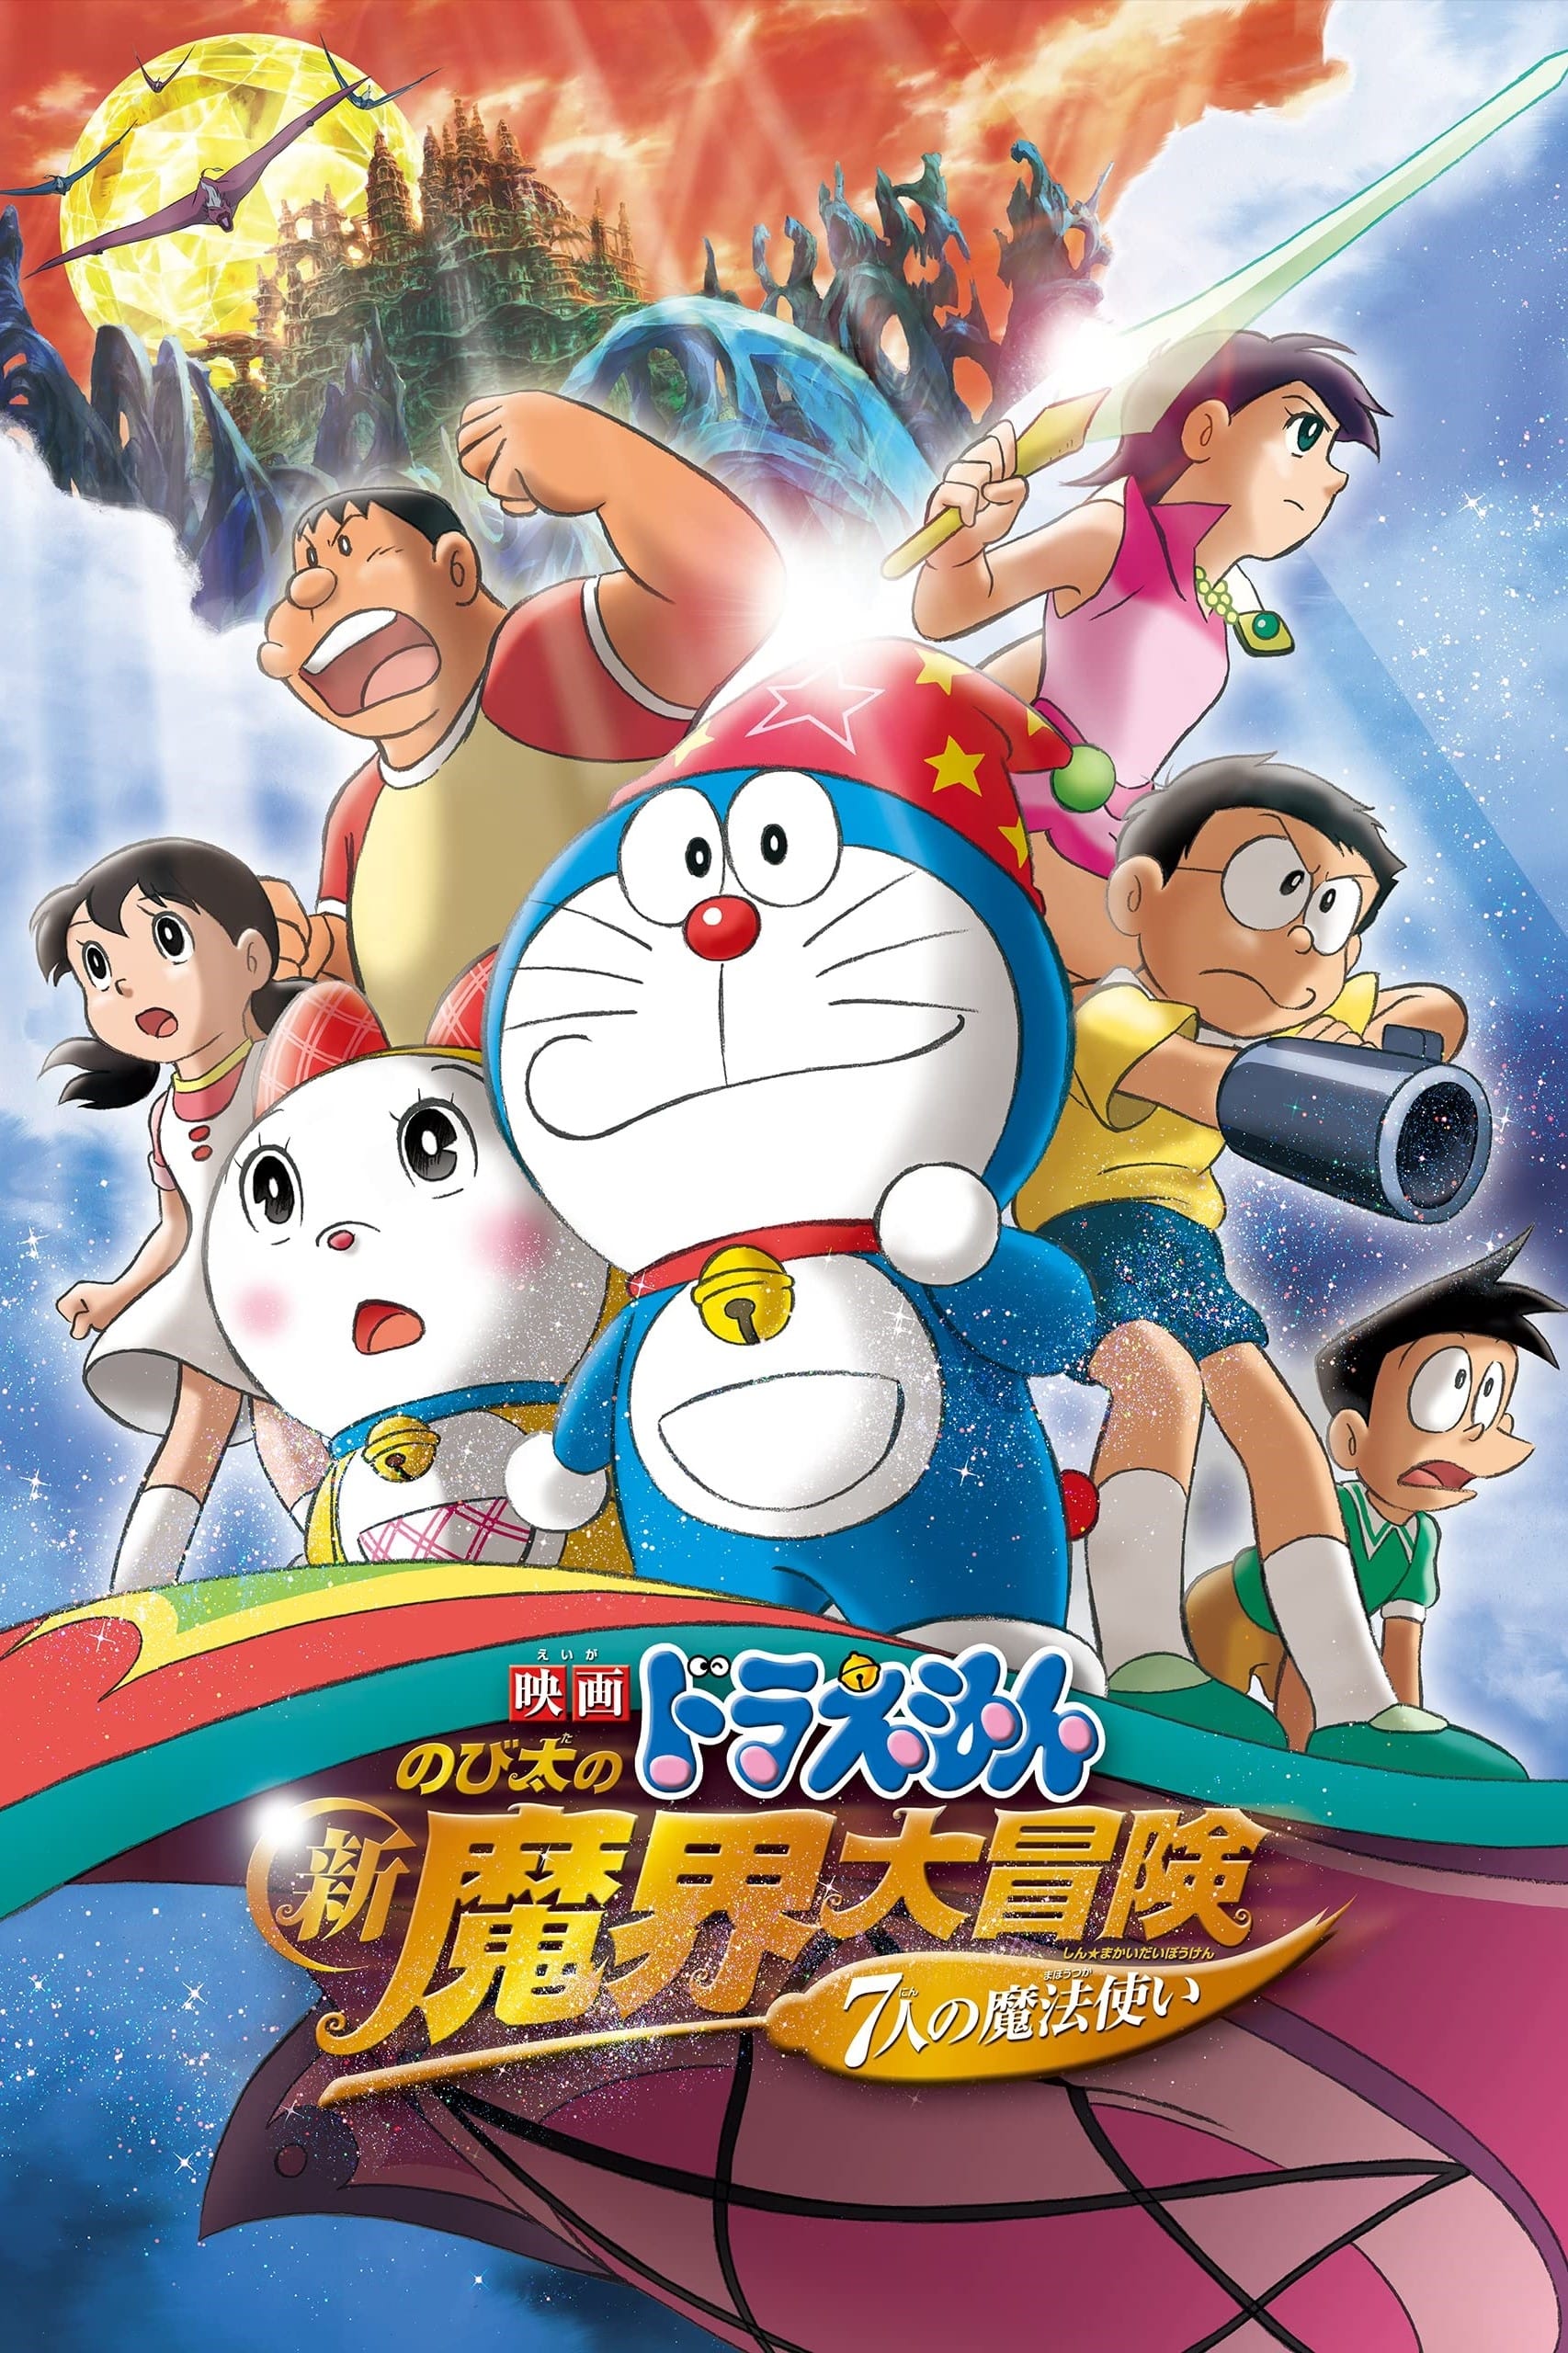 Doraemon the Movie: Nobita's New Great Adventure Into the Underworld - The Seven Magic Users (2007)